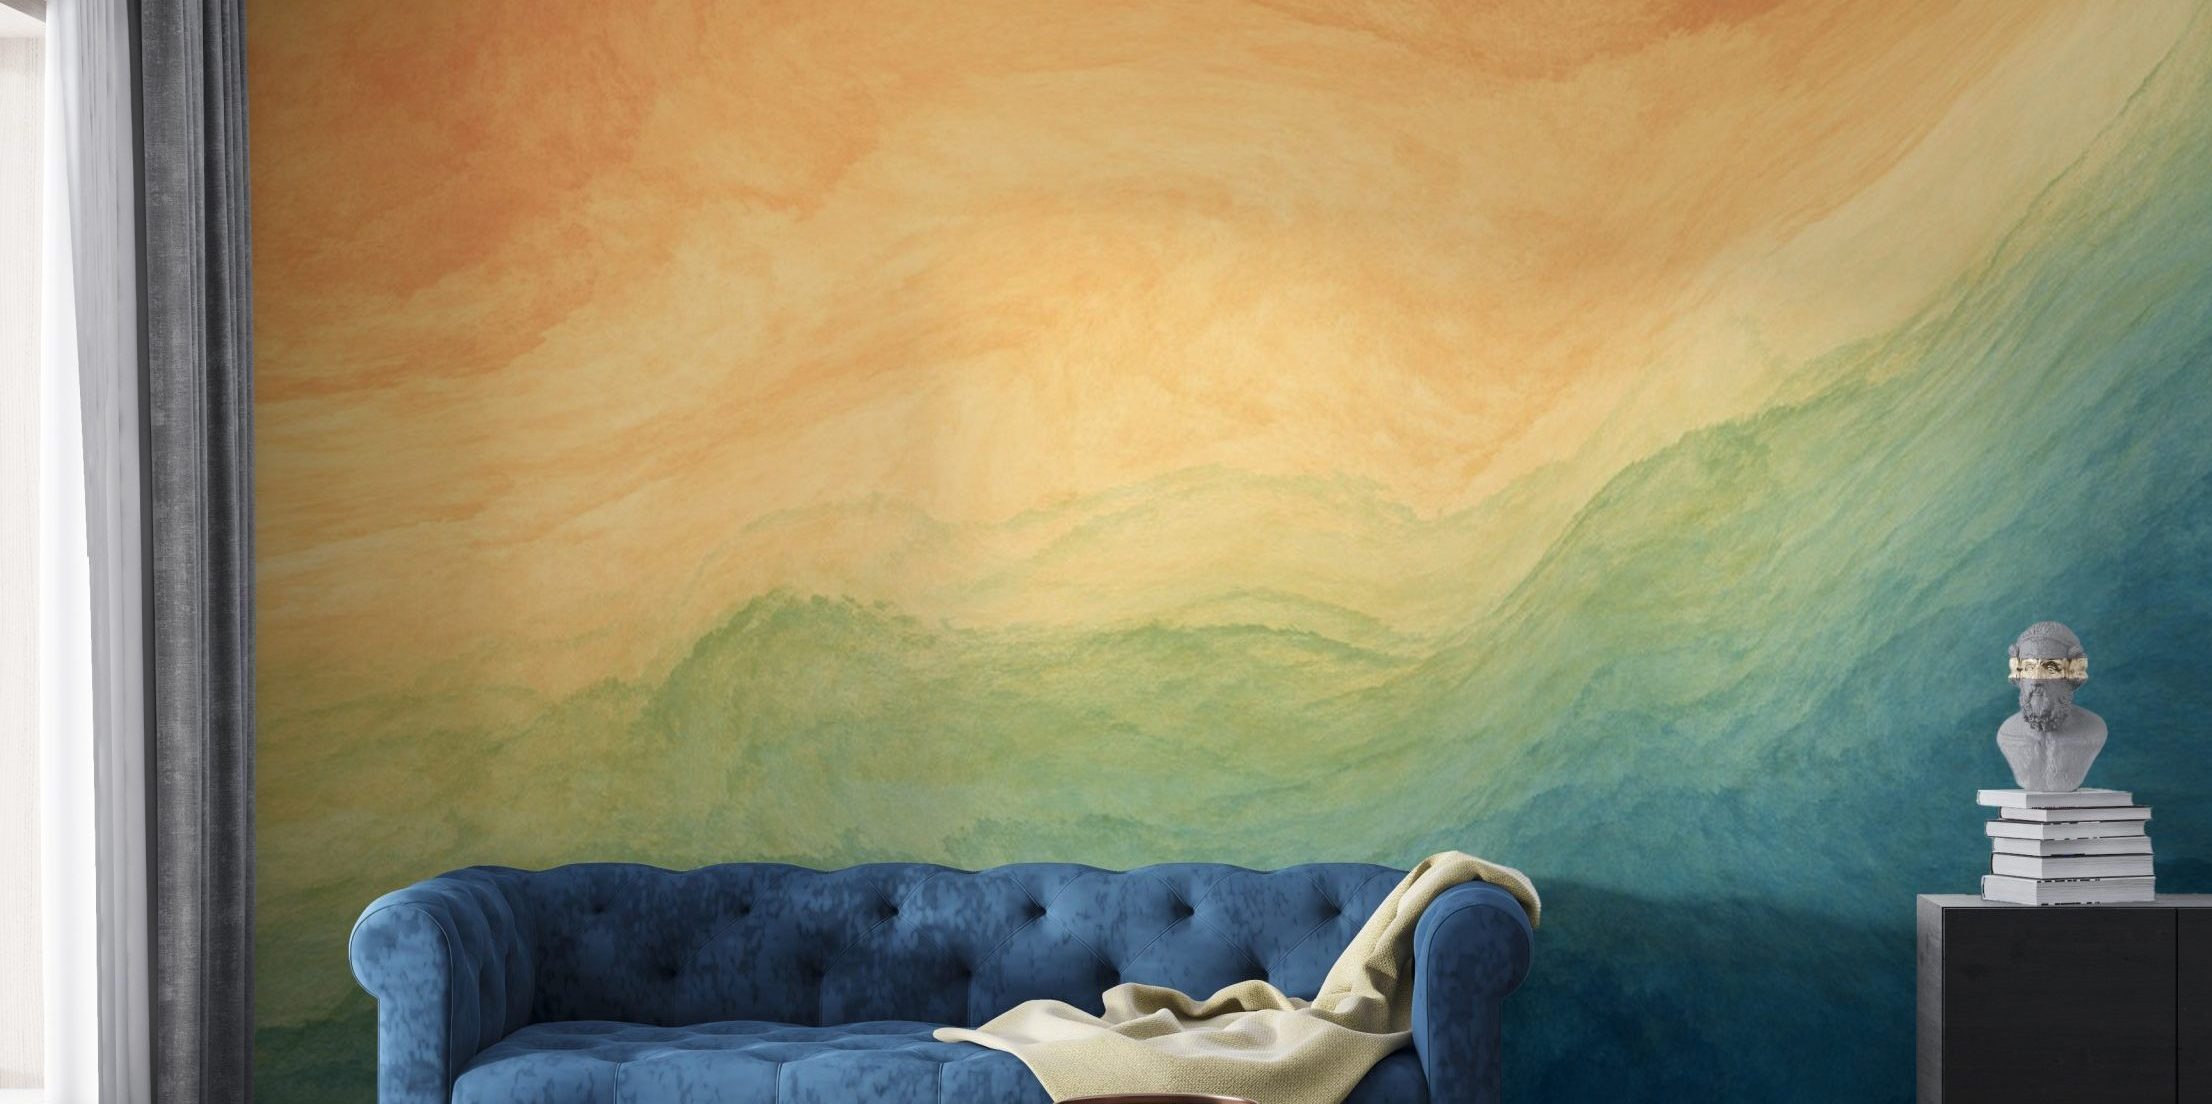 Ombre Mural Wallpaper Breathe Fresh Life into Your Home Decor